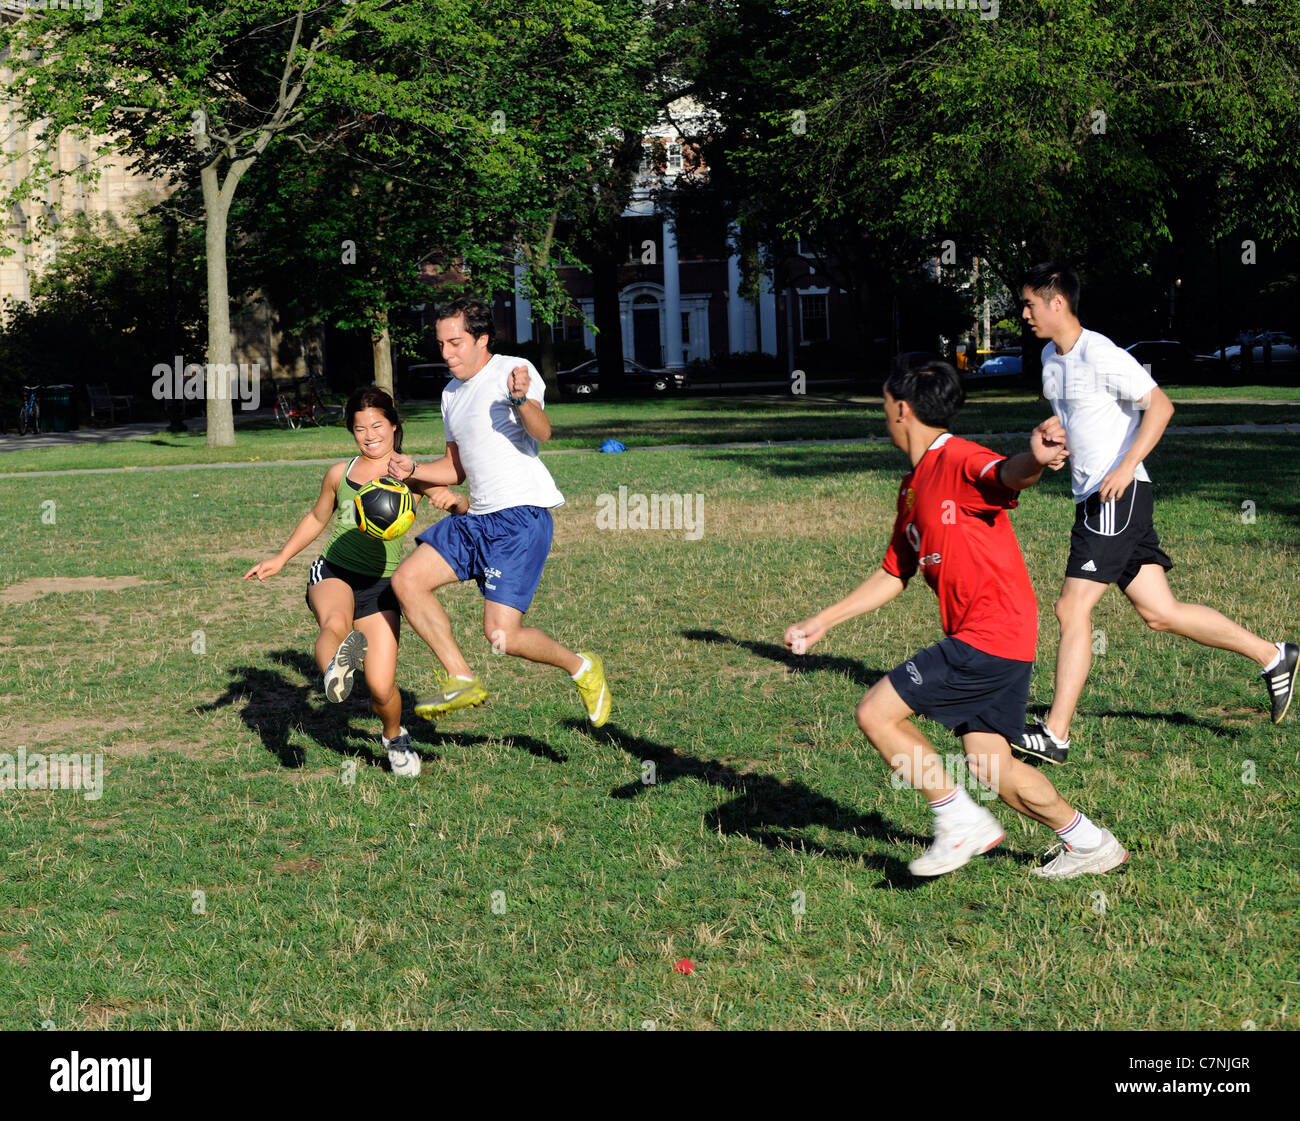 Yale University students attending summer school play pickup soccer. Stock Photo